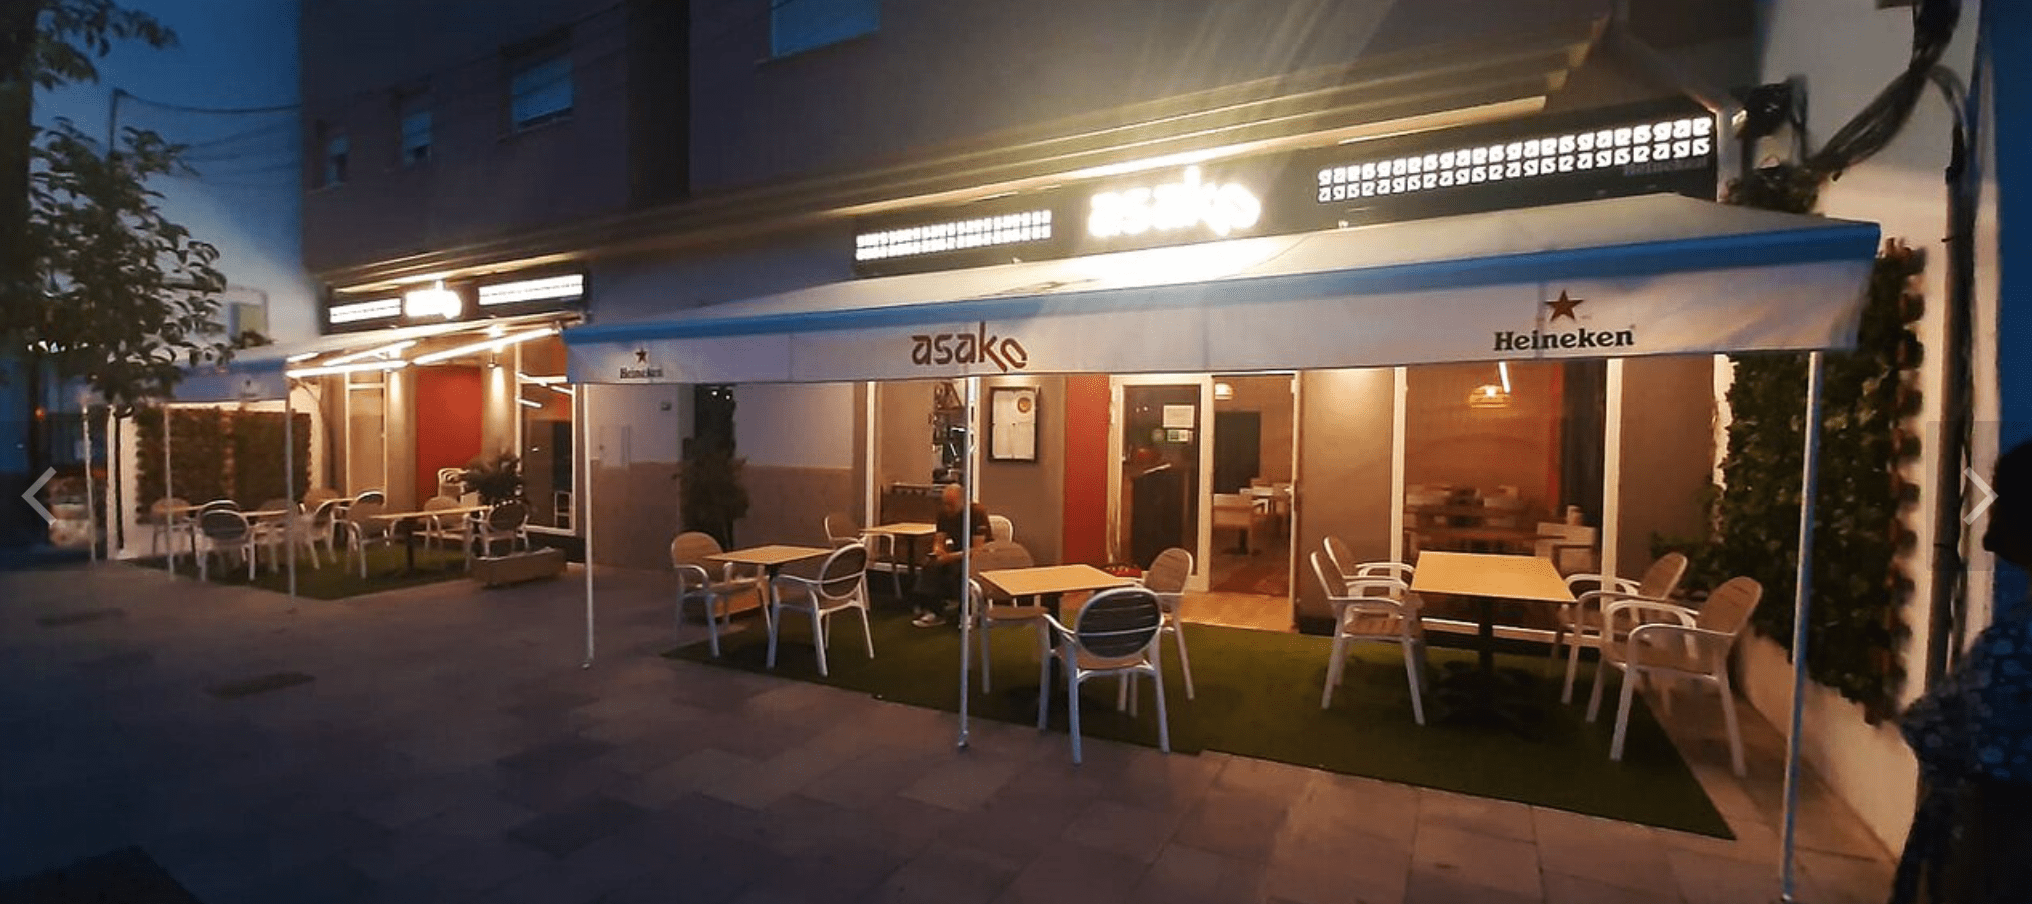 Mobiliario terraza restaurante instalado por INOU